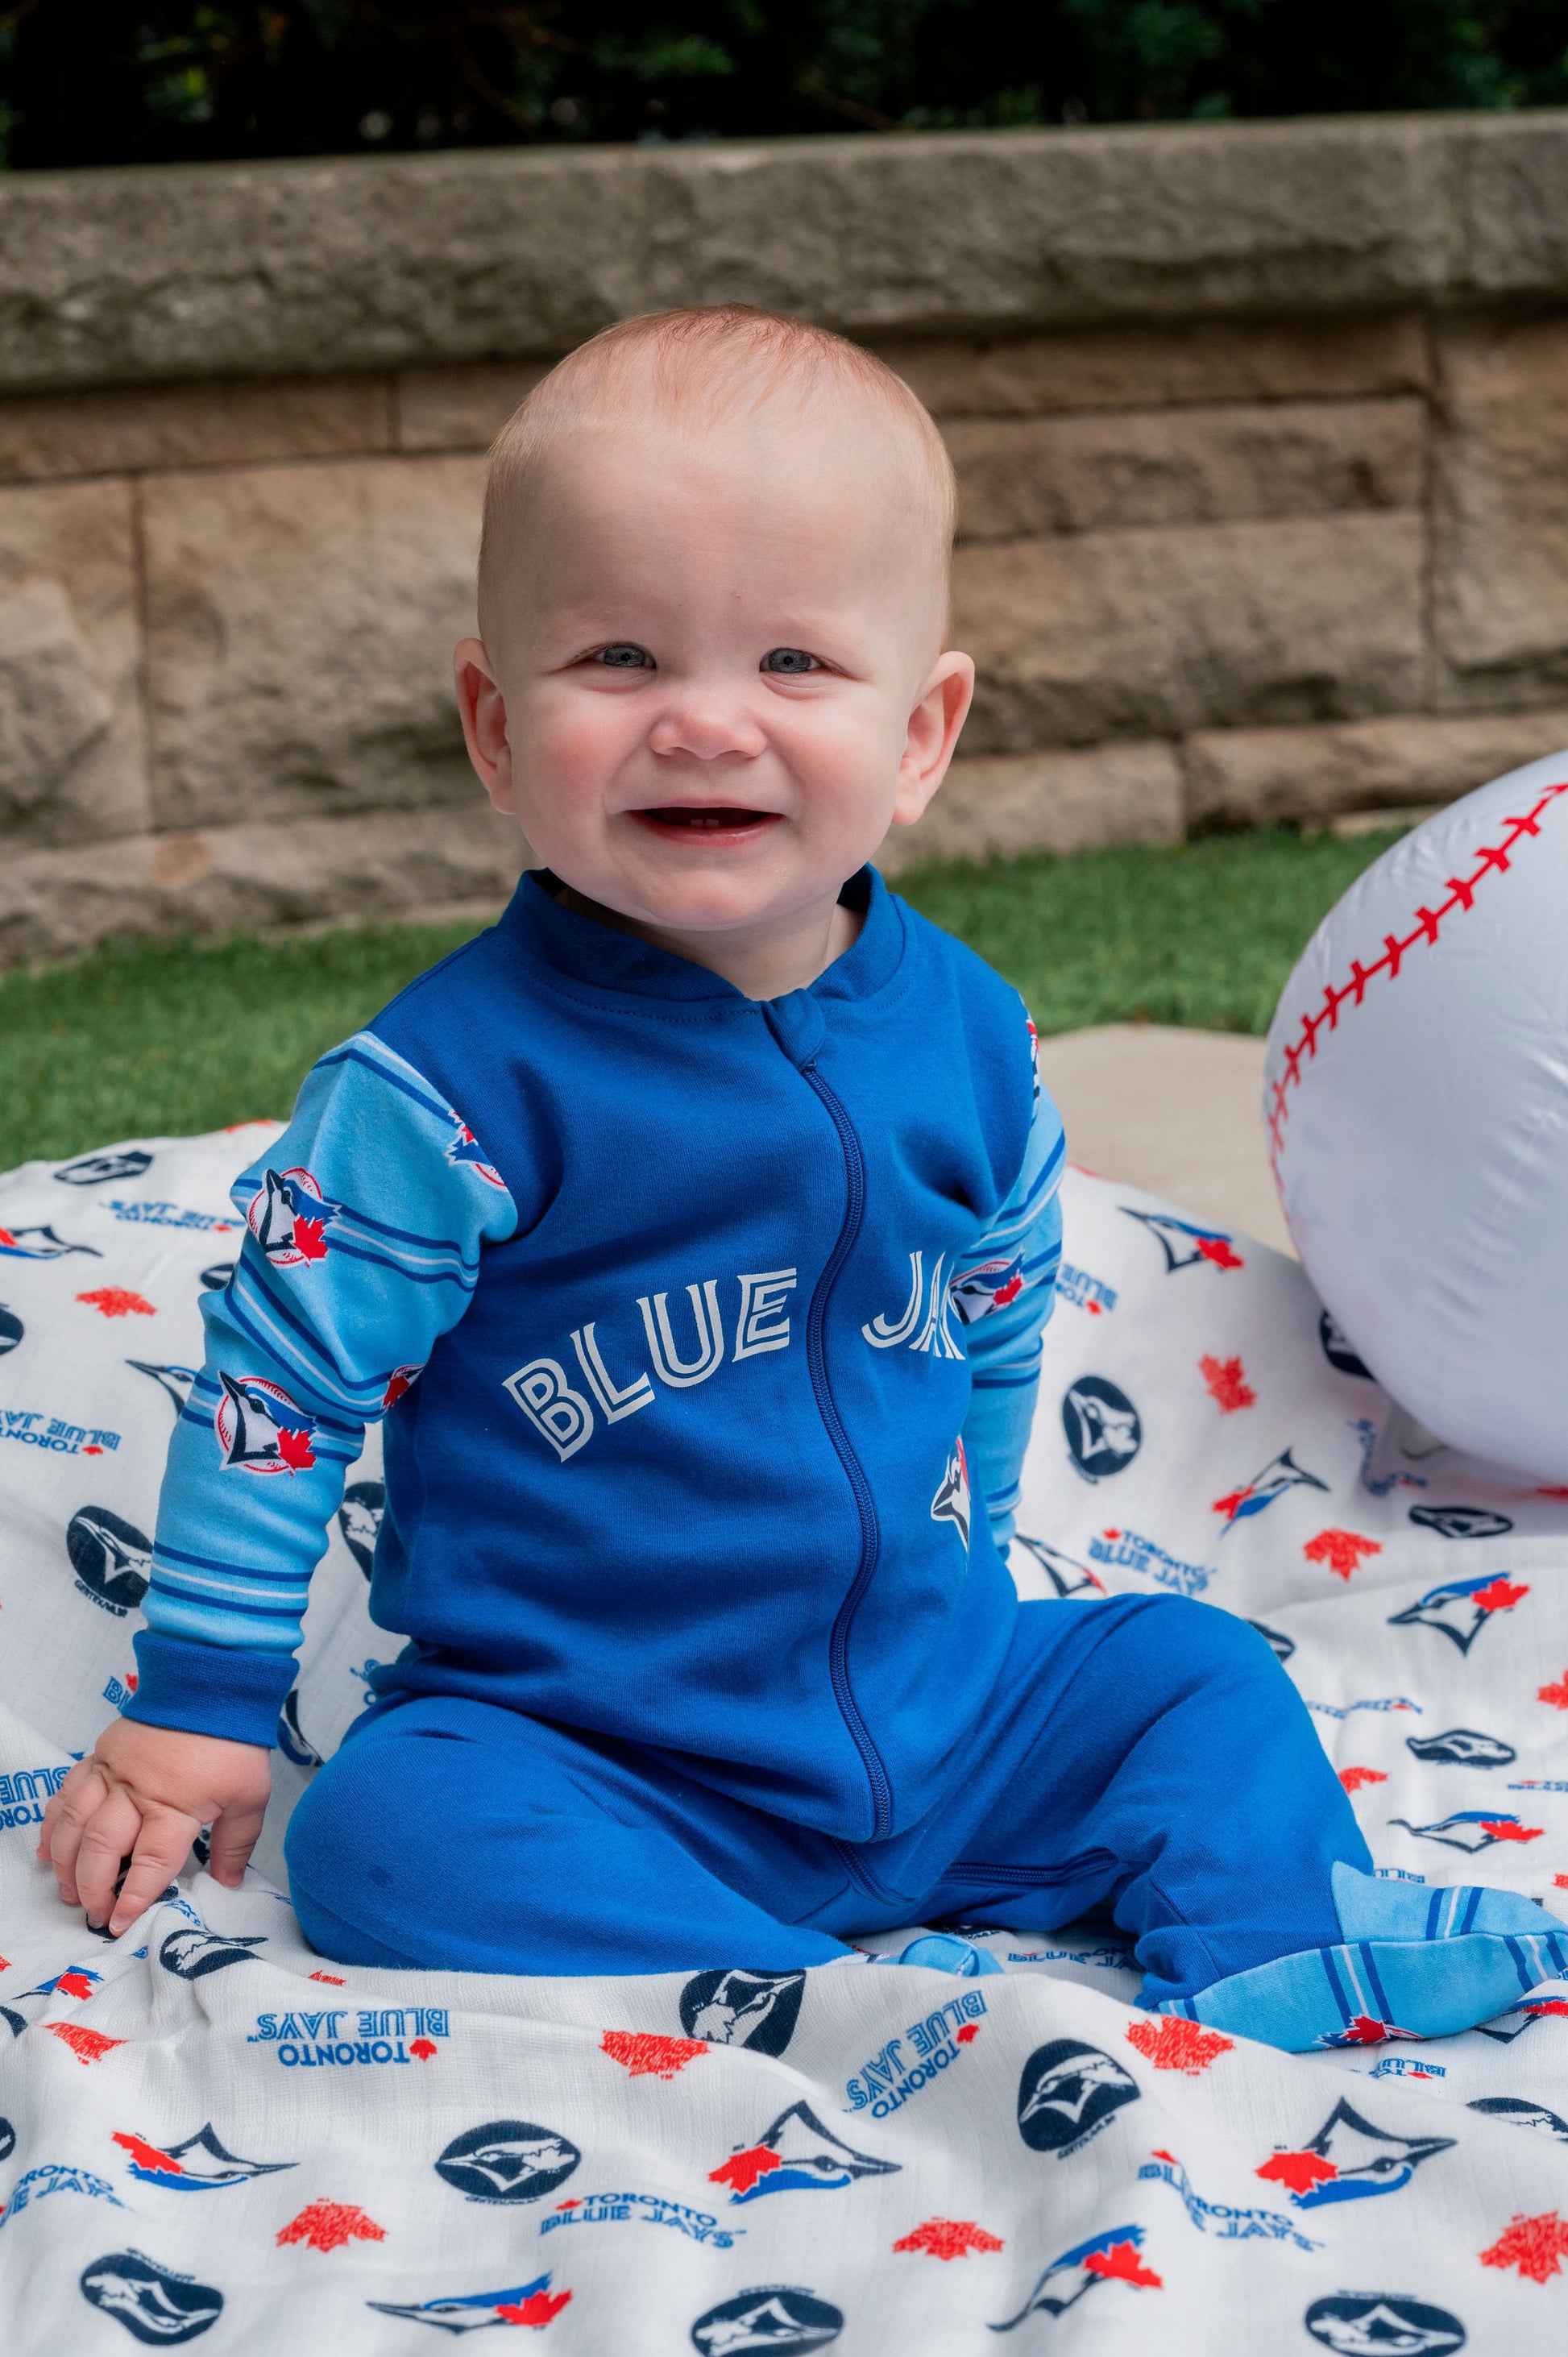 Blue Jays newborn/baby outfit Toronto baseball baby gift Blue Jays